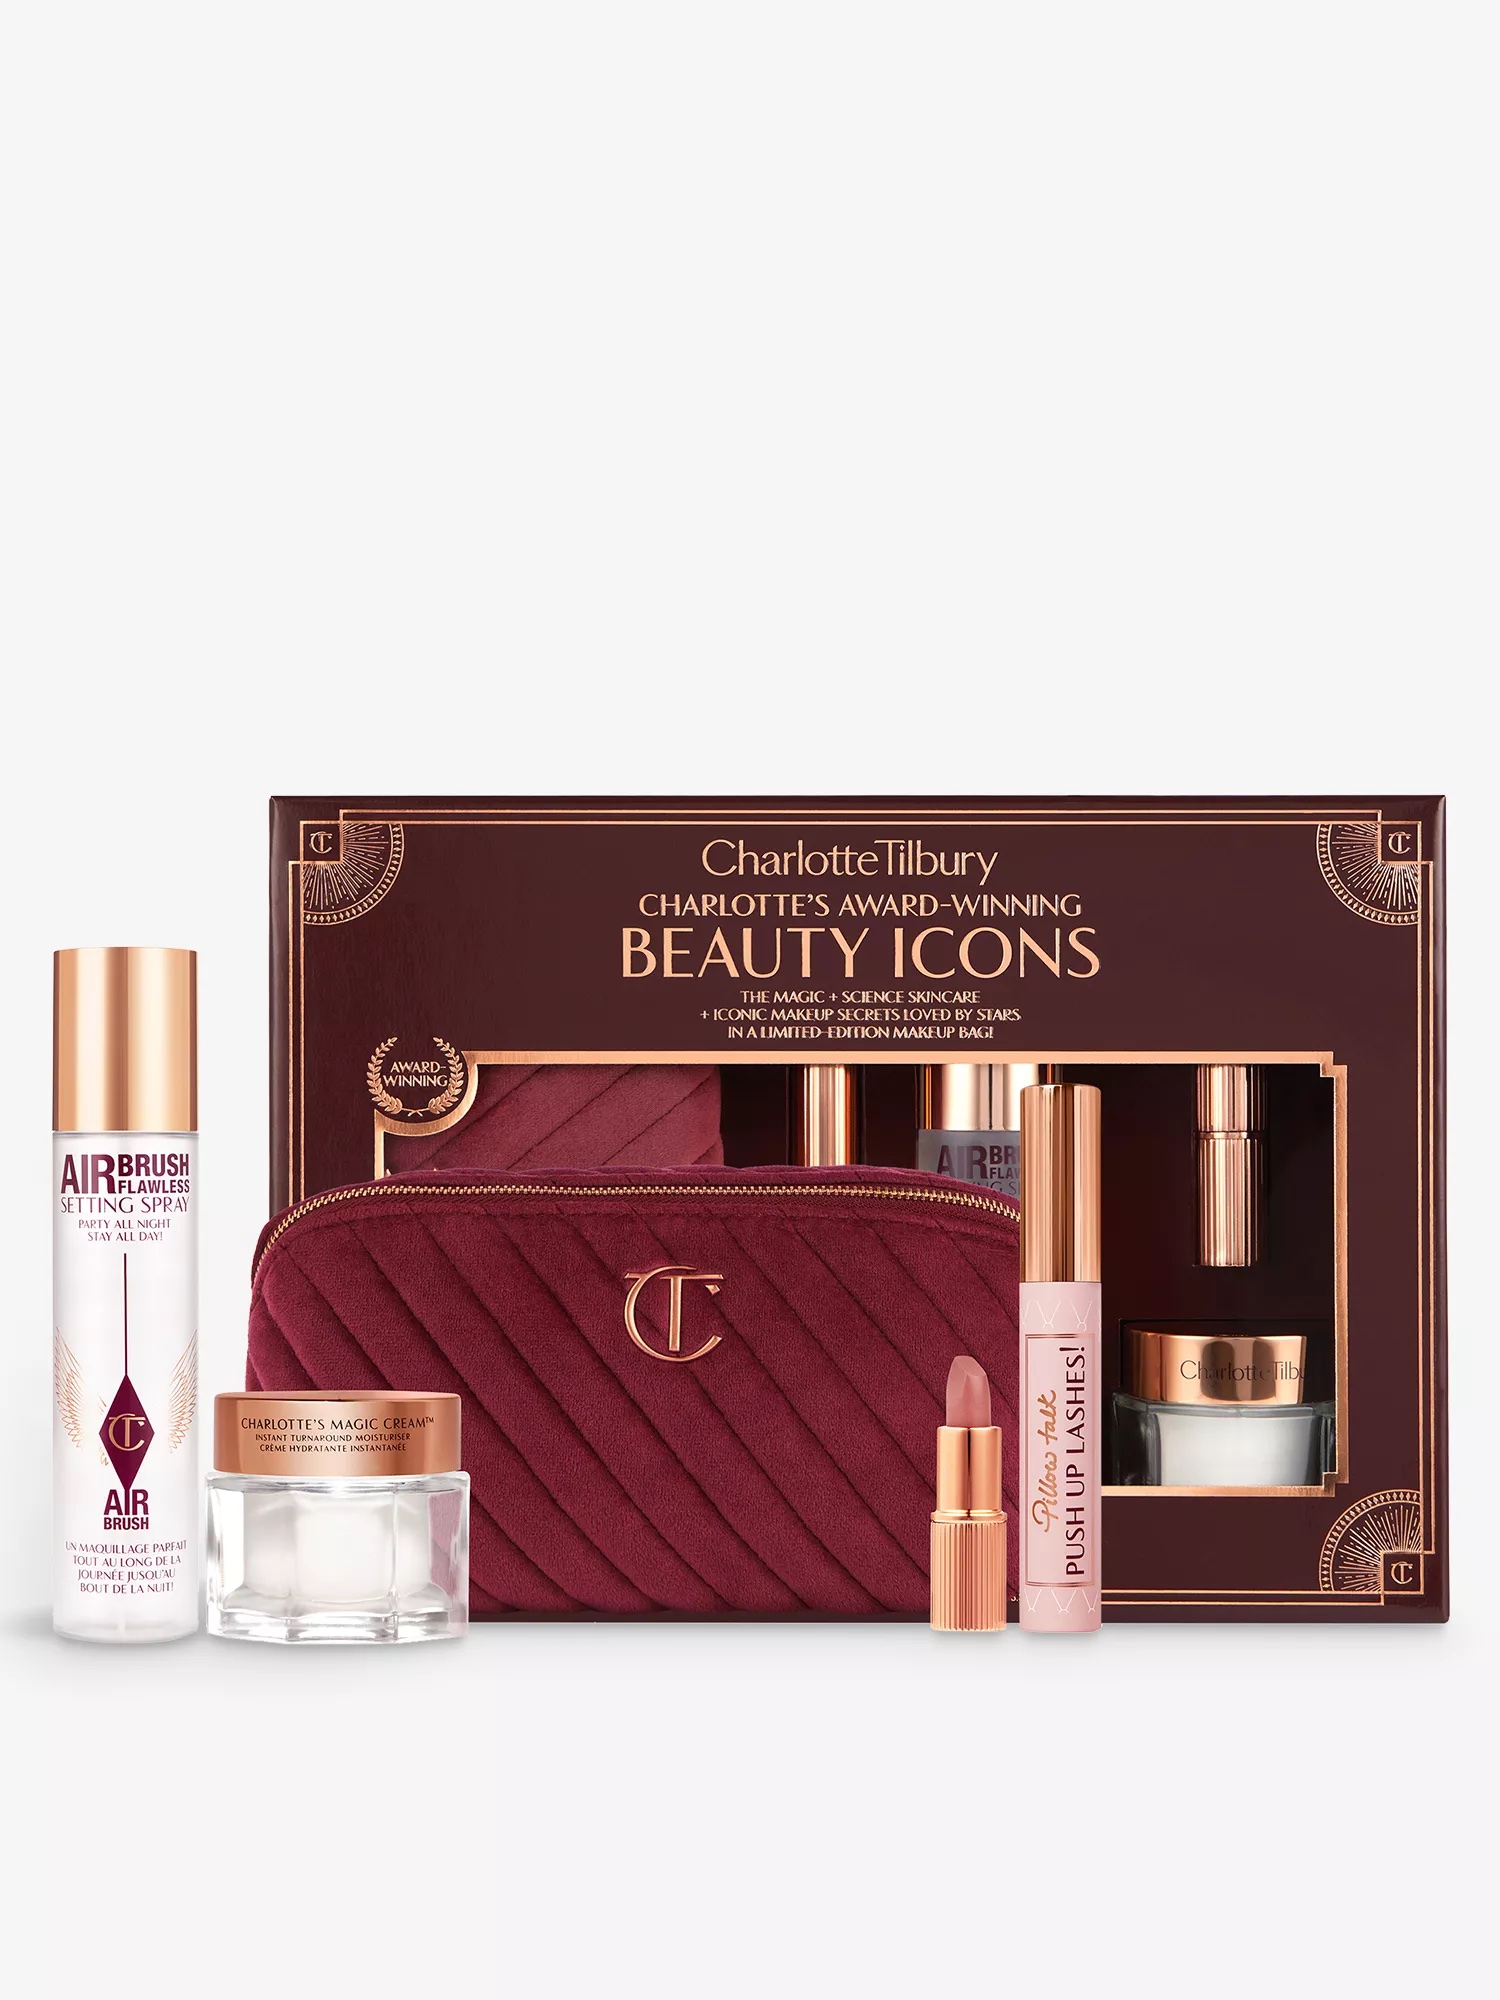 Charlotte's Award Winning Beauty Icons limited-edition gift set